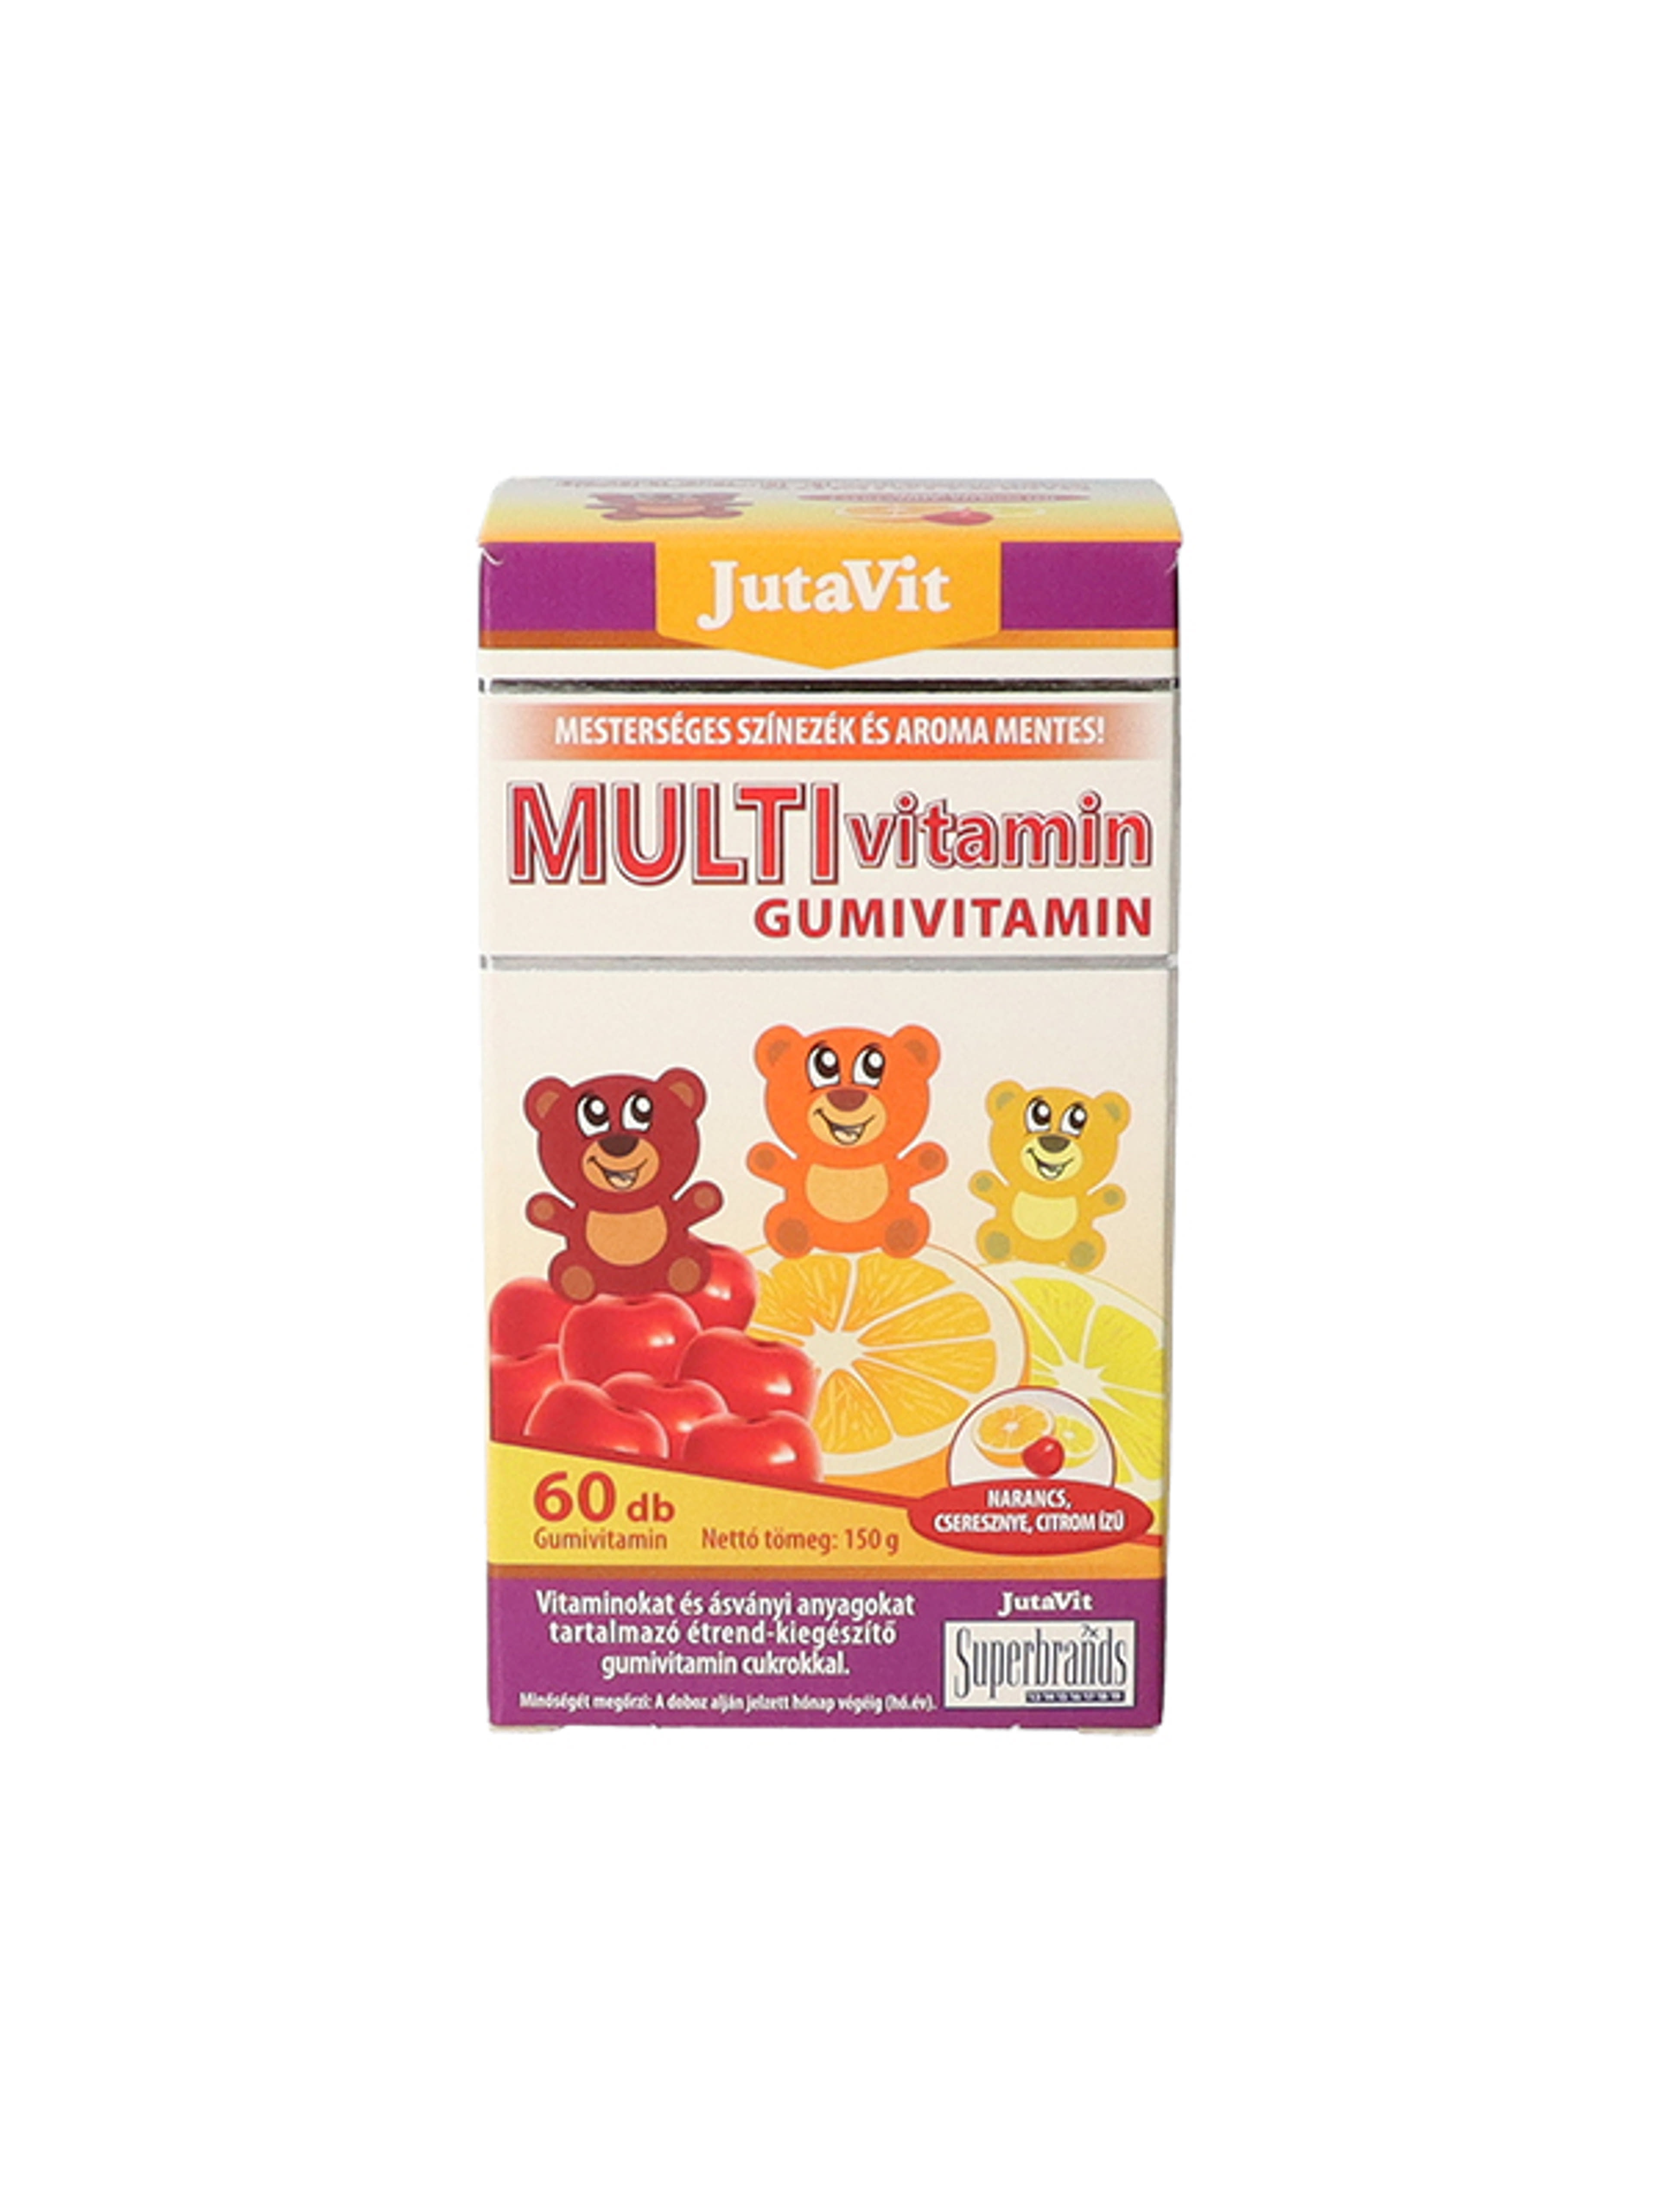 JutaVit Multivitamin Gyümölcs Ízű Gumivitamin - 60 db